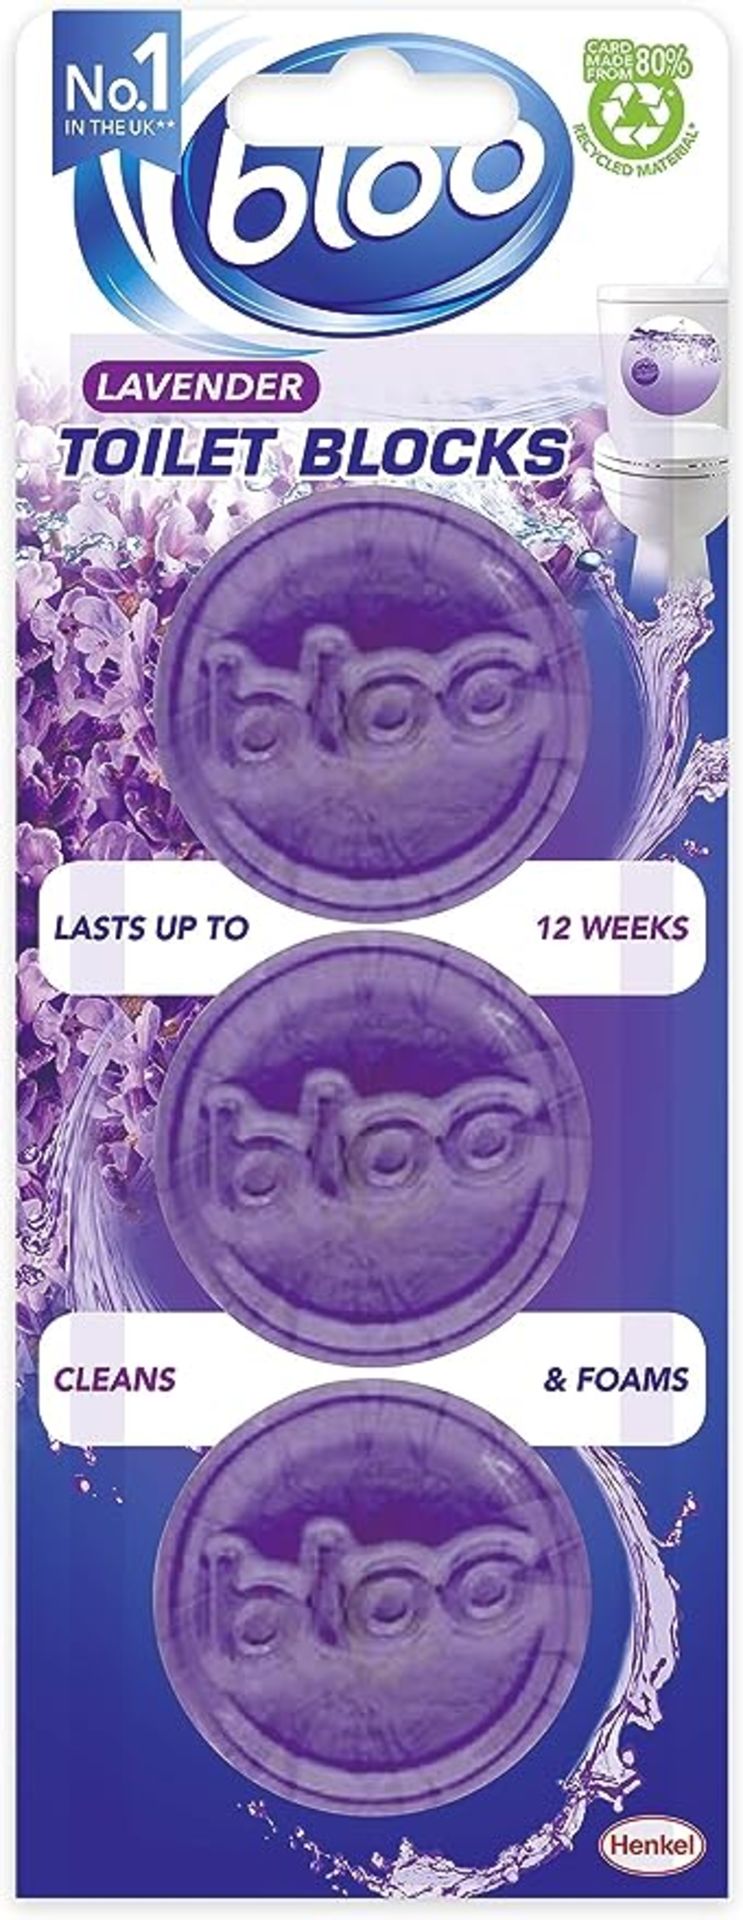 x48 Brand New Packs of 3 Bloo Lavender Toilet Blocks. Lasts Up To 12 Weeks, Cleans & Foams.